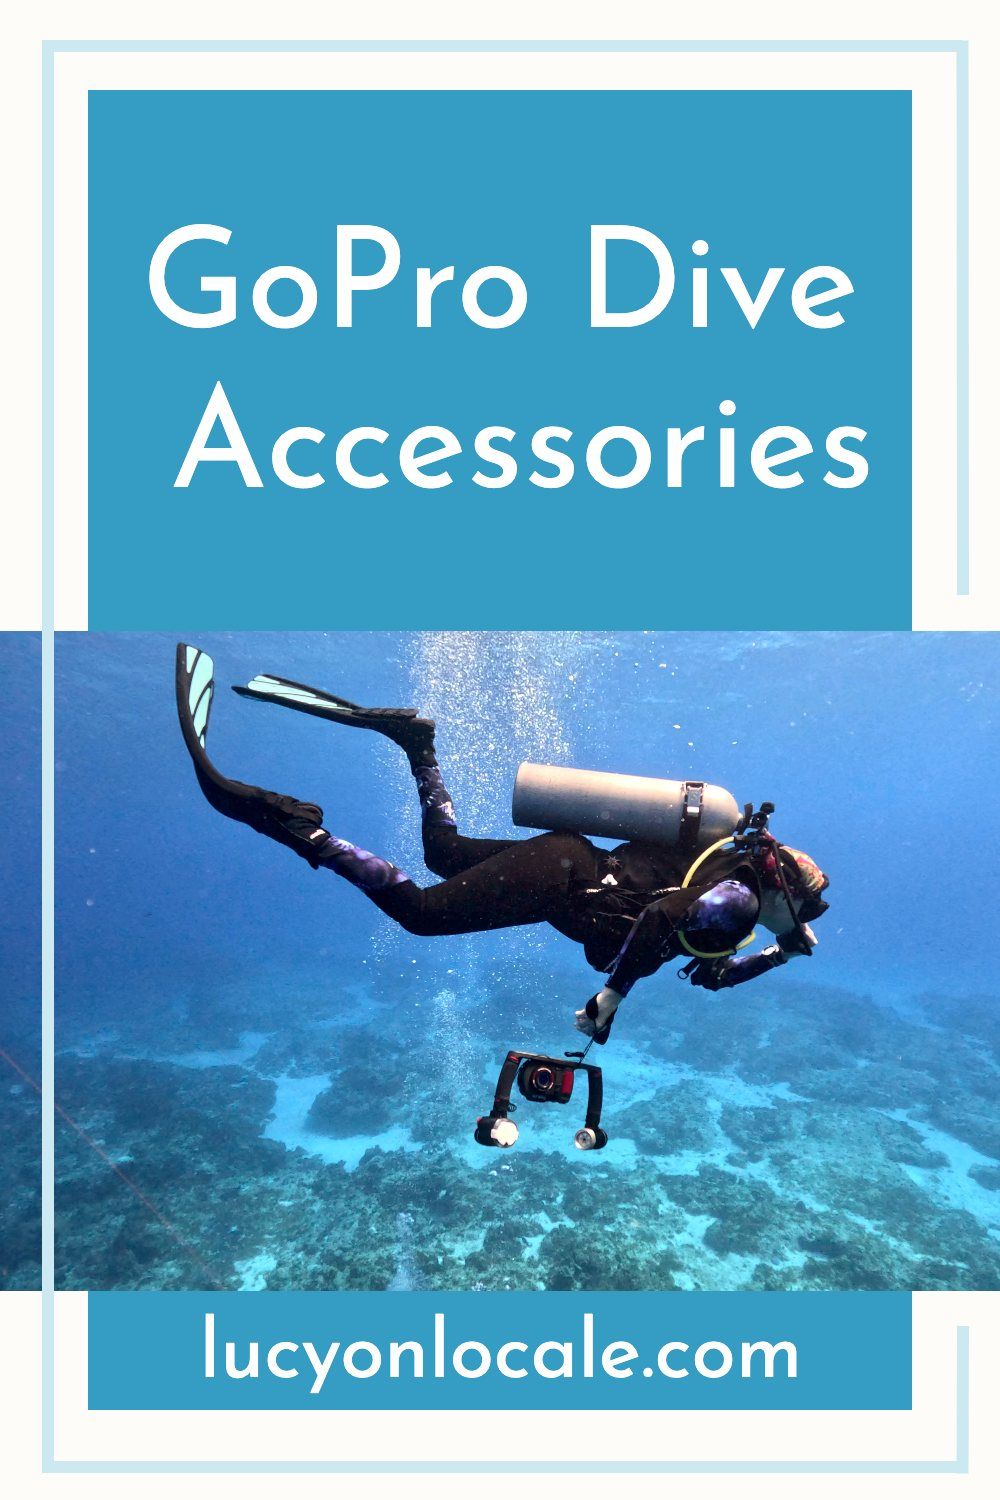 GoPro dive accessories